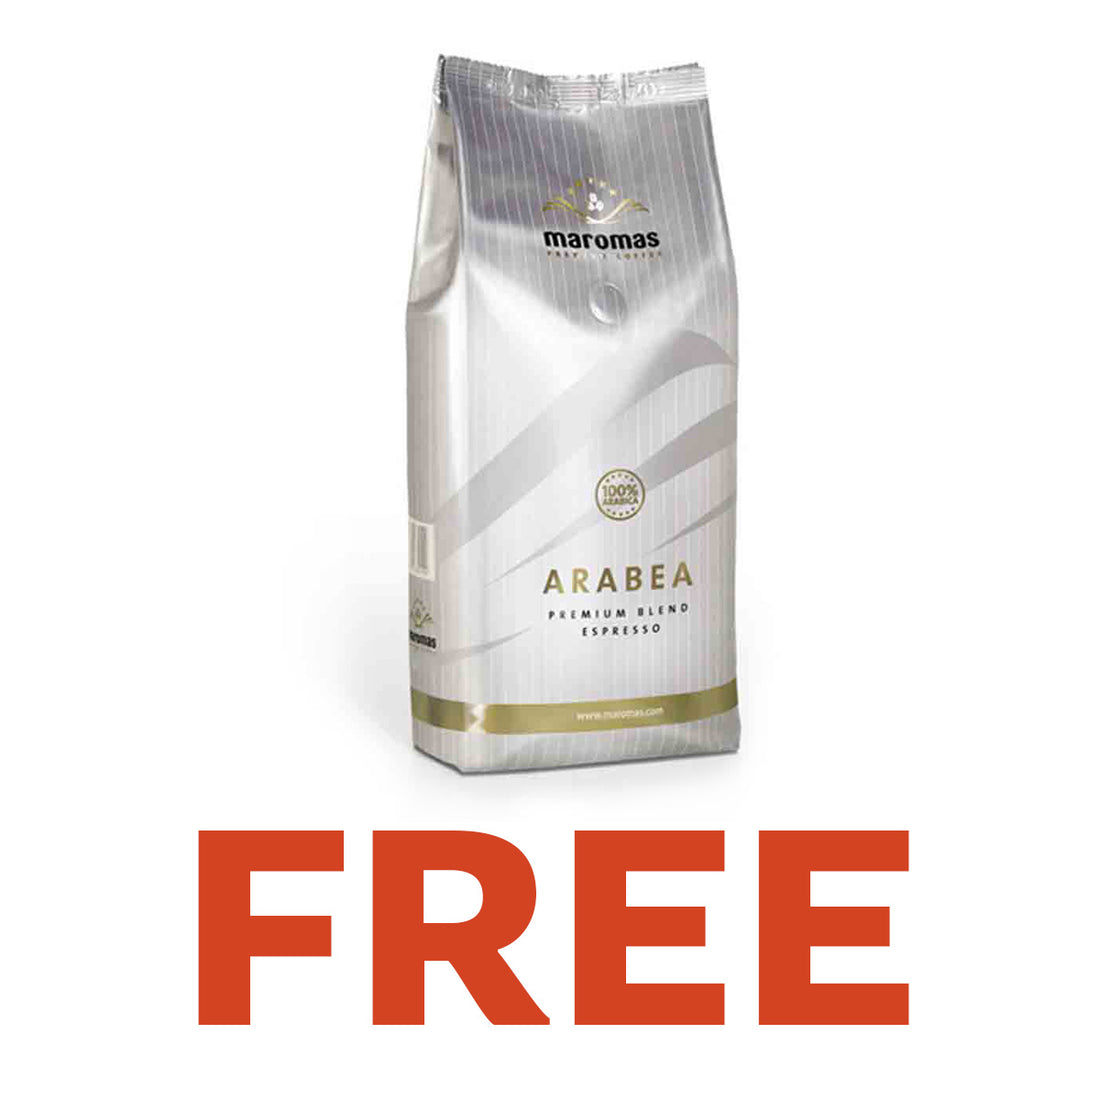 FREE Maromas Arabea Whole Bean Espresso